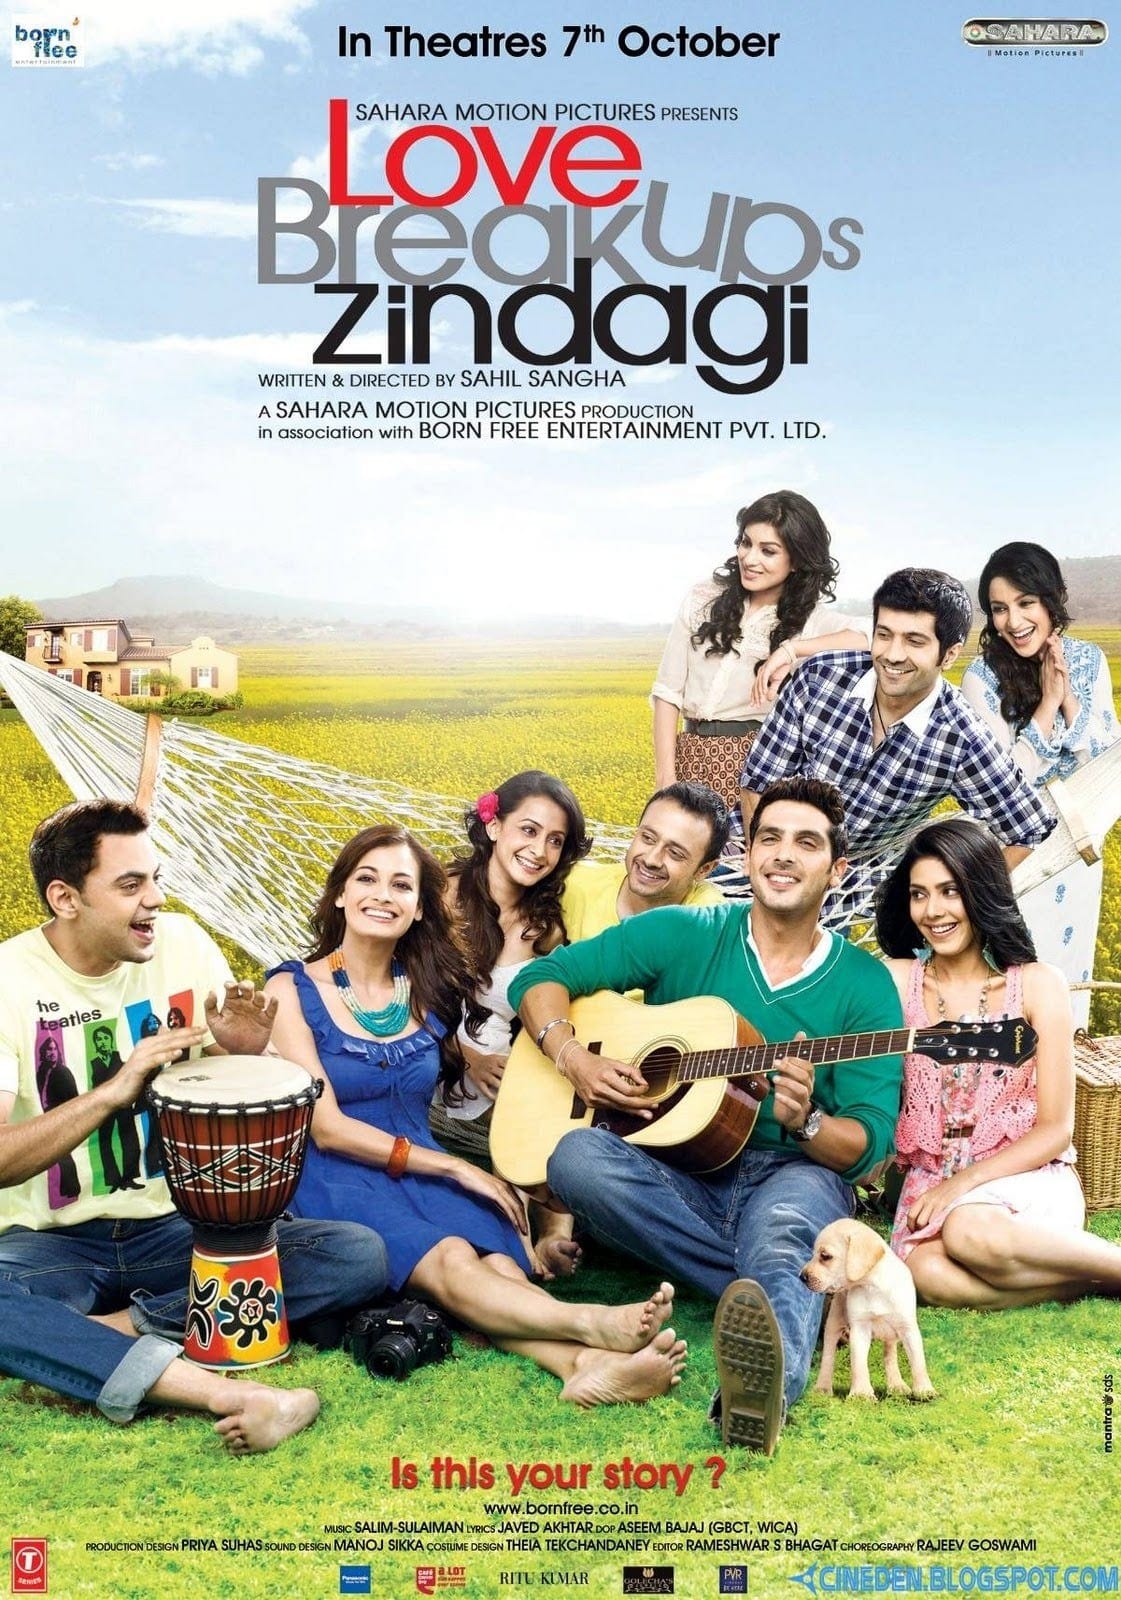 Poster for the movie "Love Breakups Zindagi"